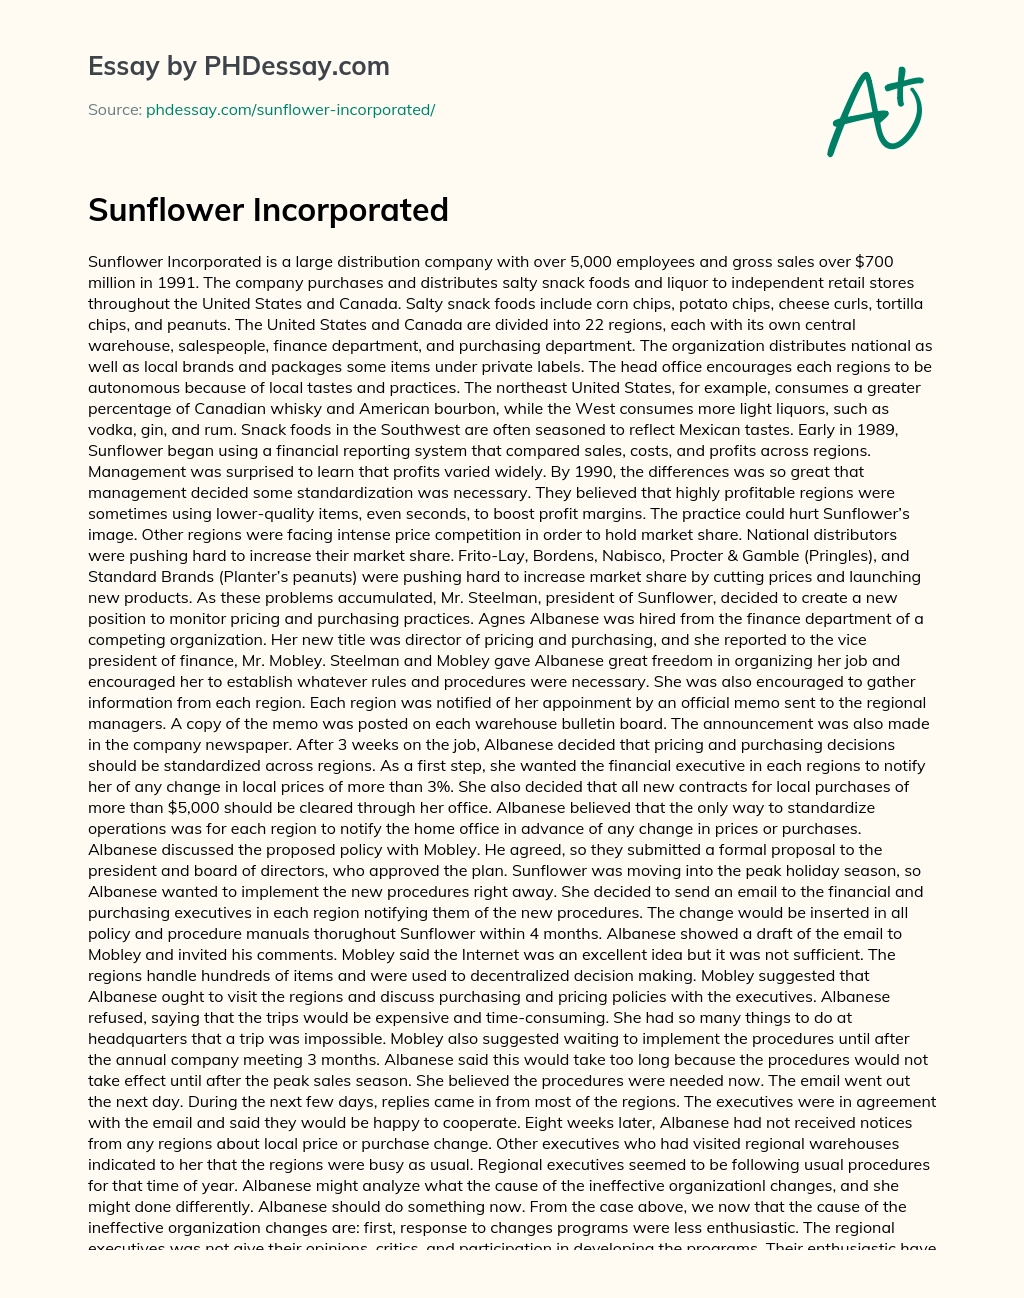 Sunflower Incorporated essay